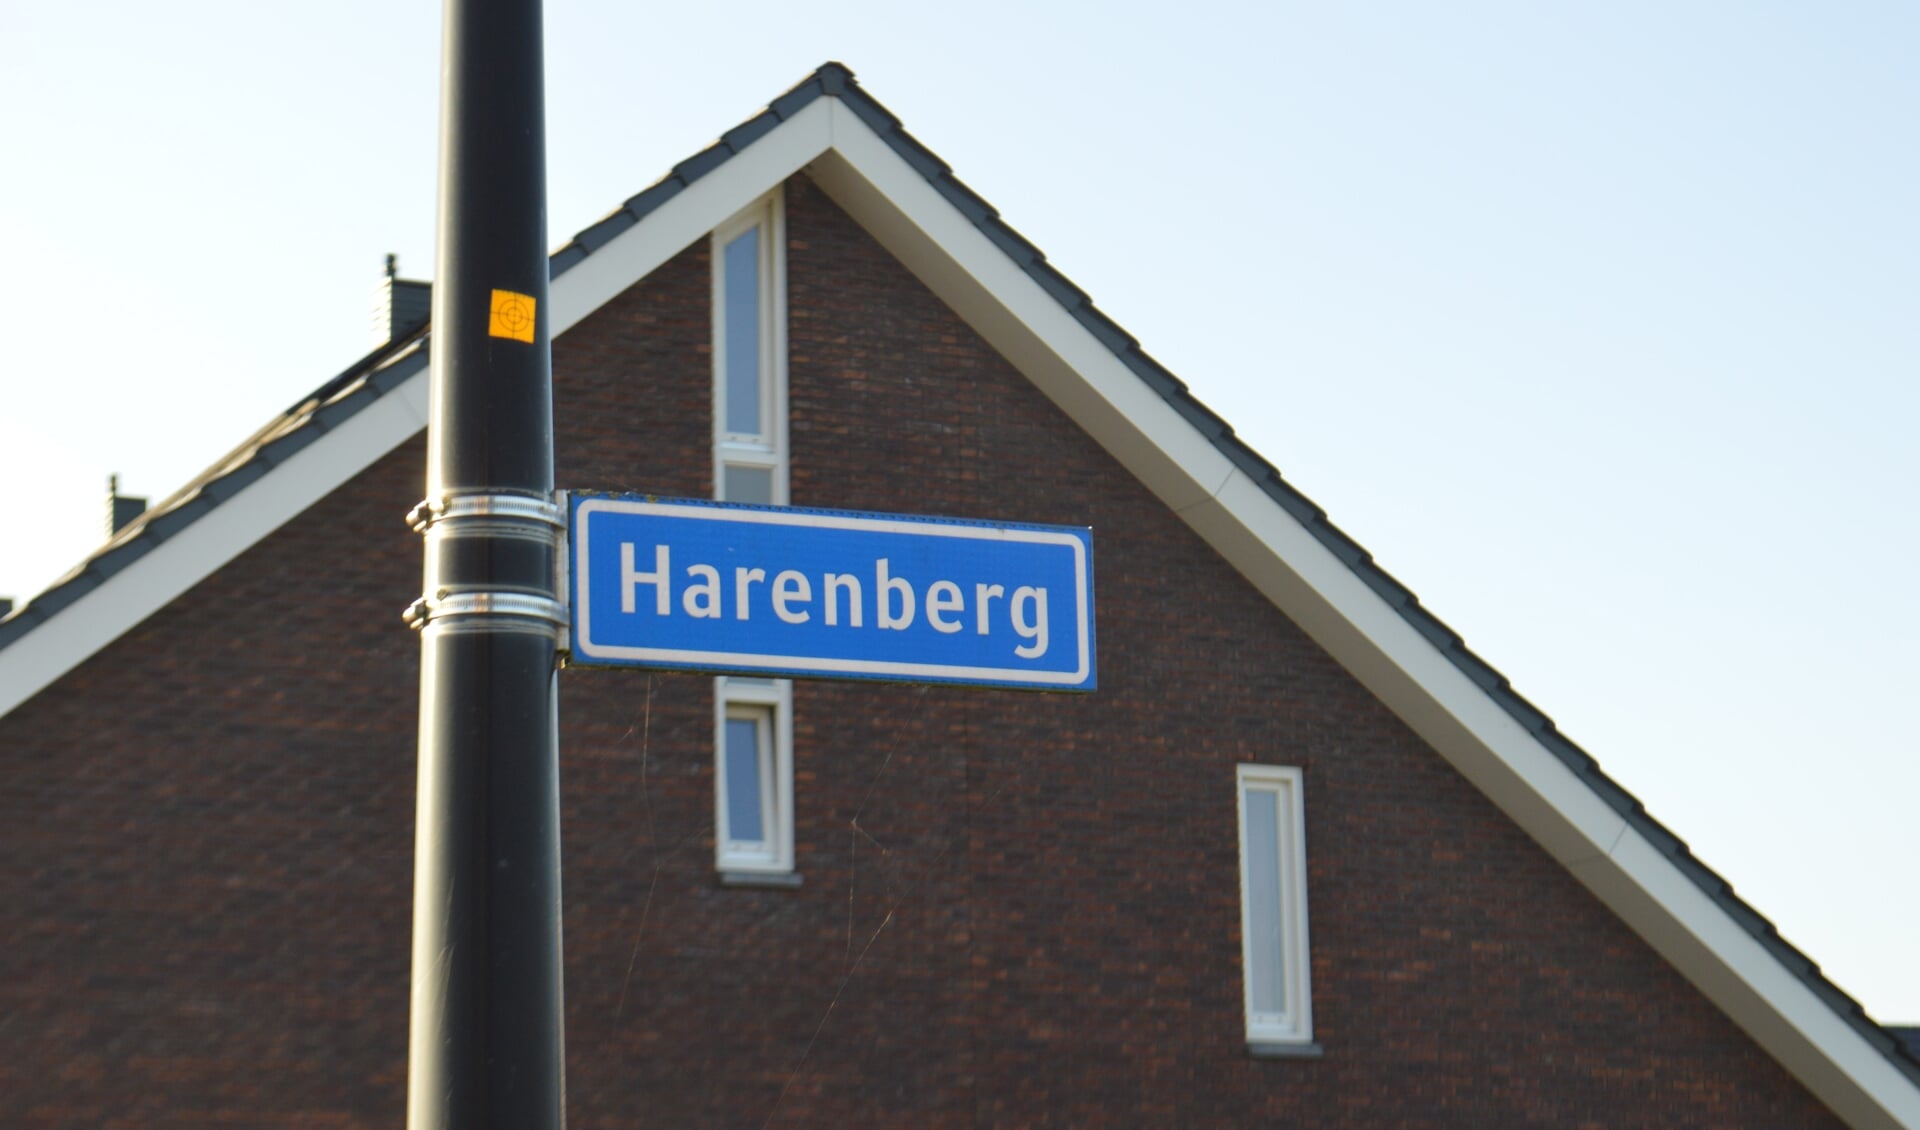 Harenberg